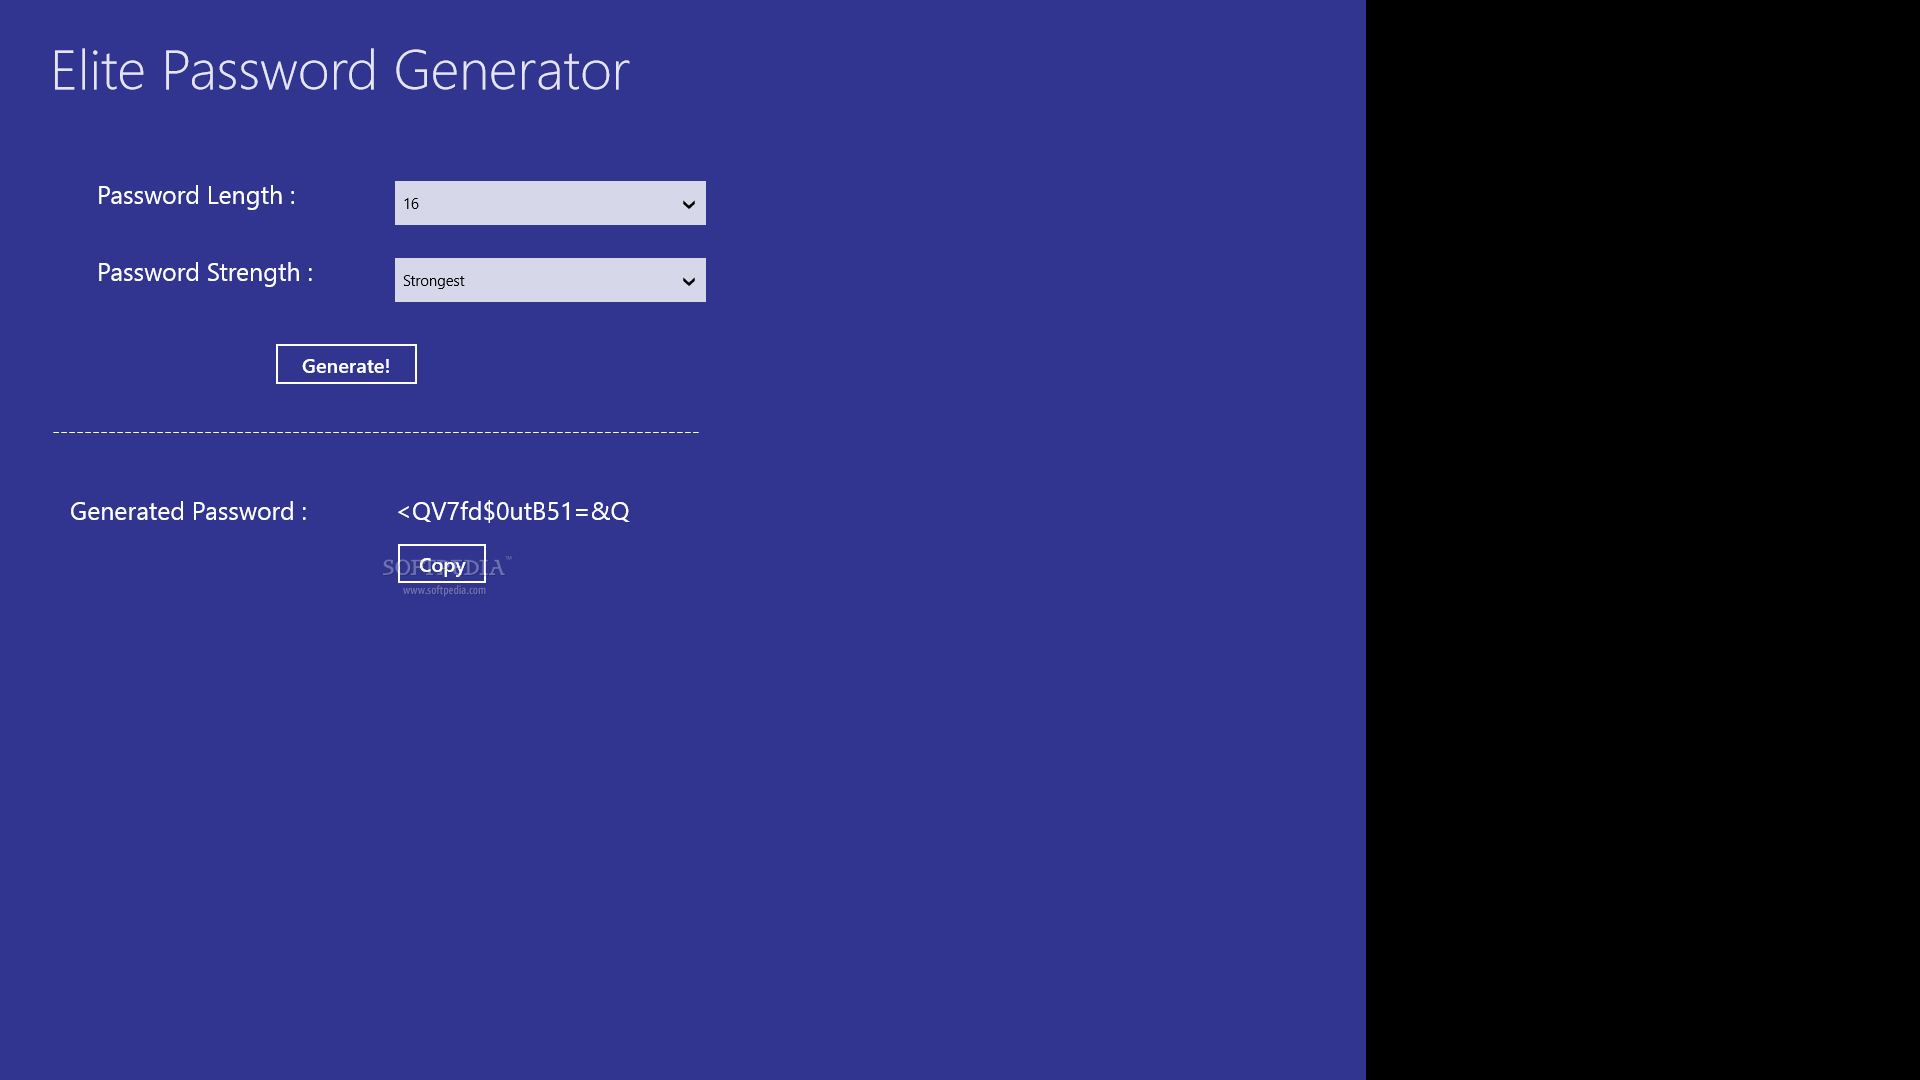 PasswordGenerator 23.6.13 download the new version for windows